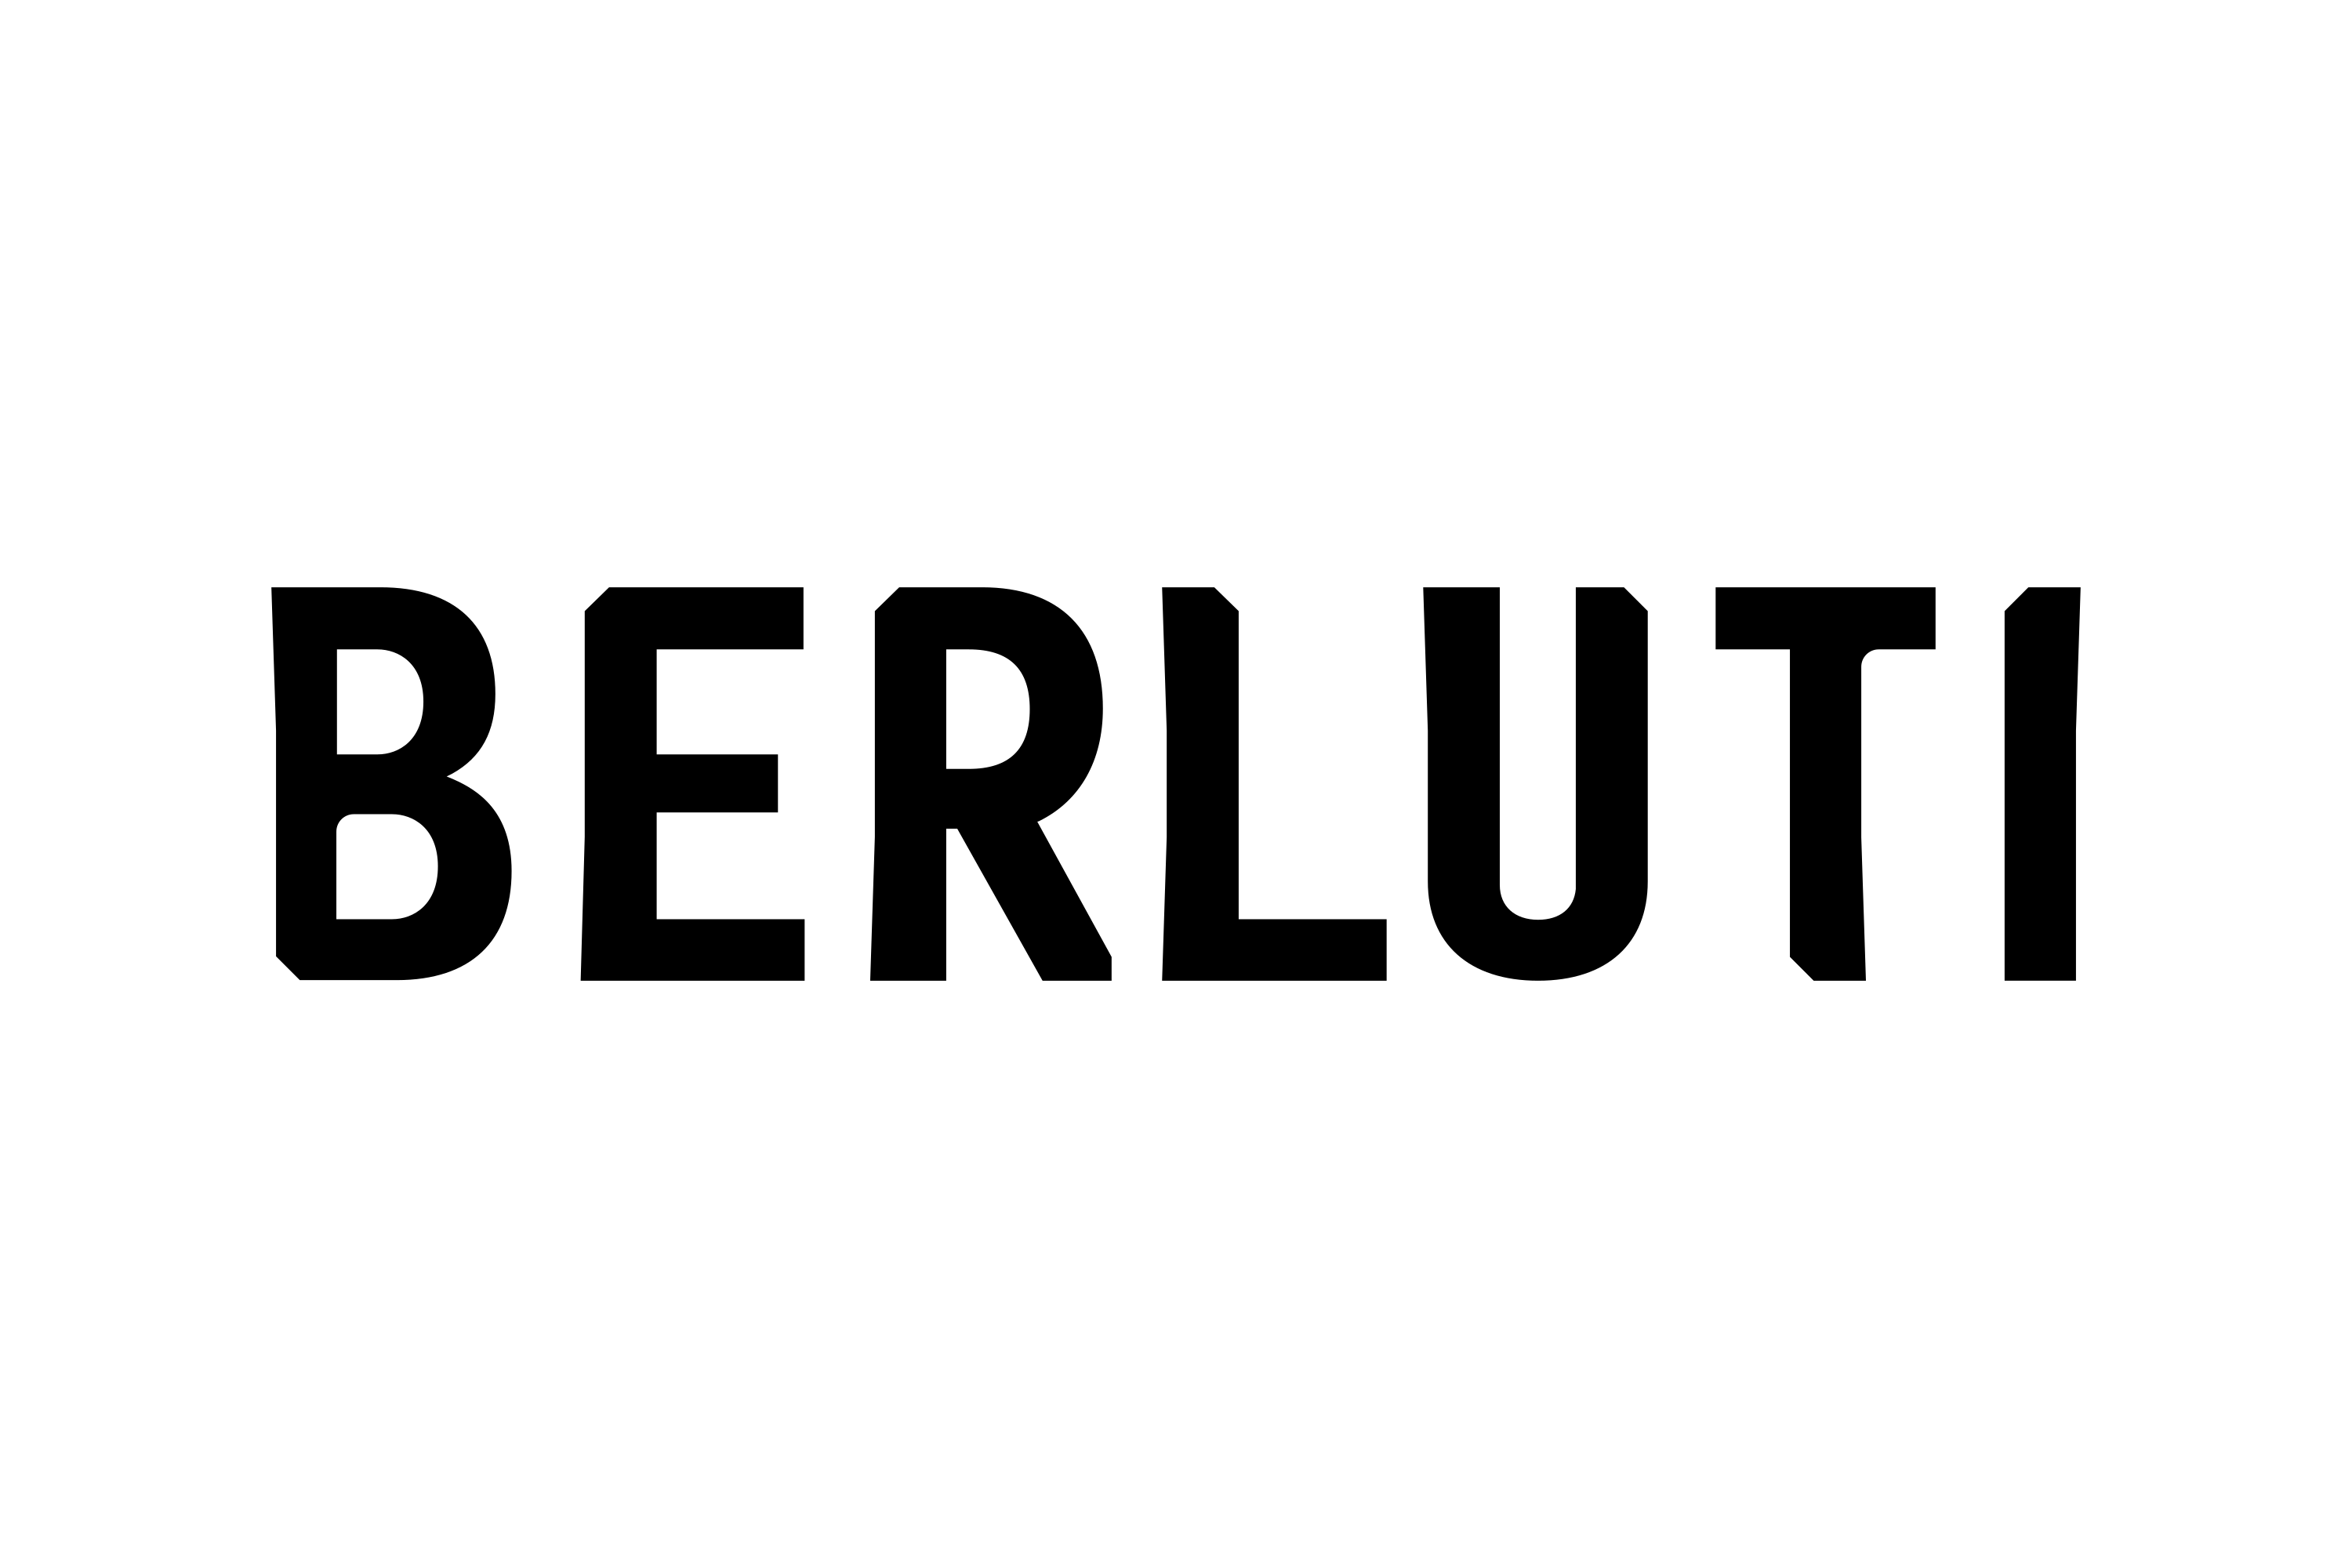 Download Berluti Logo in SVG Vector or PNG File Format - Logo.wine